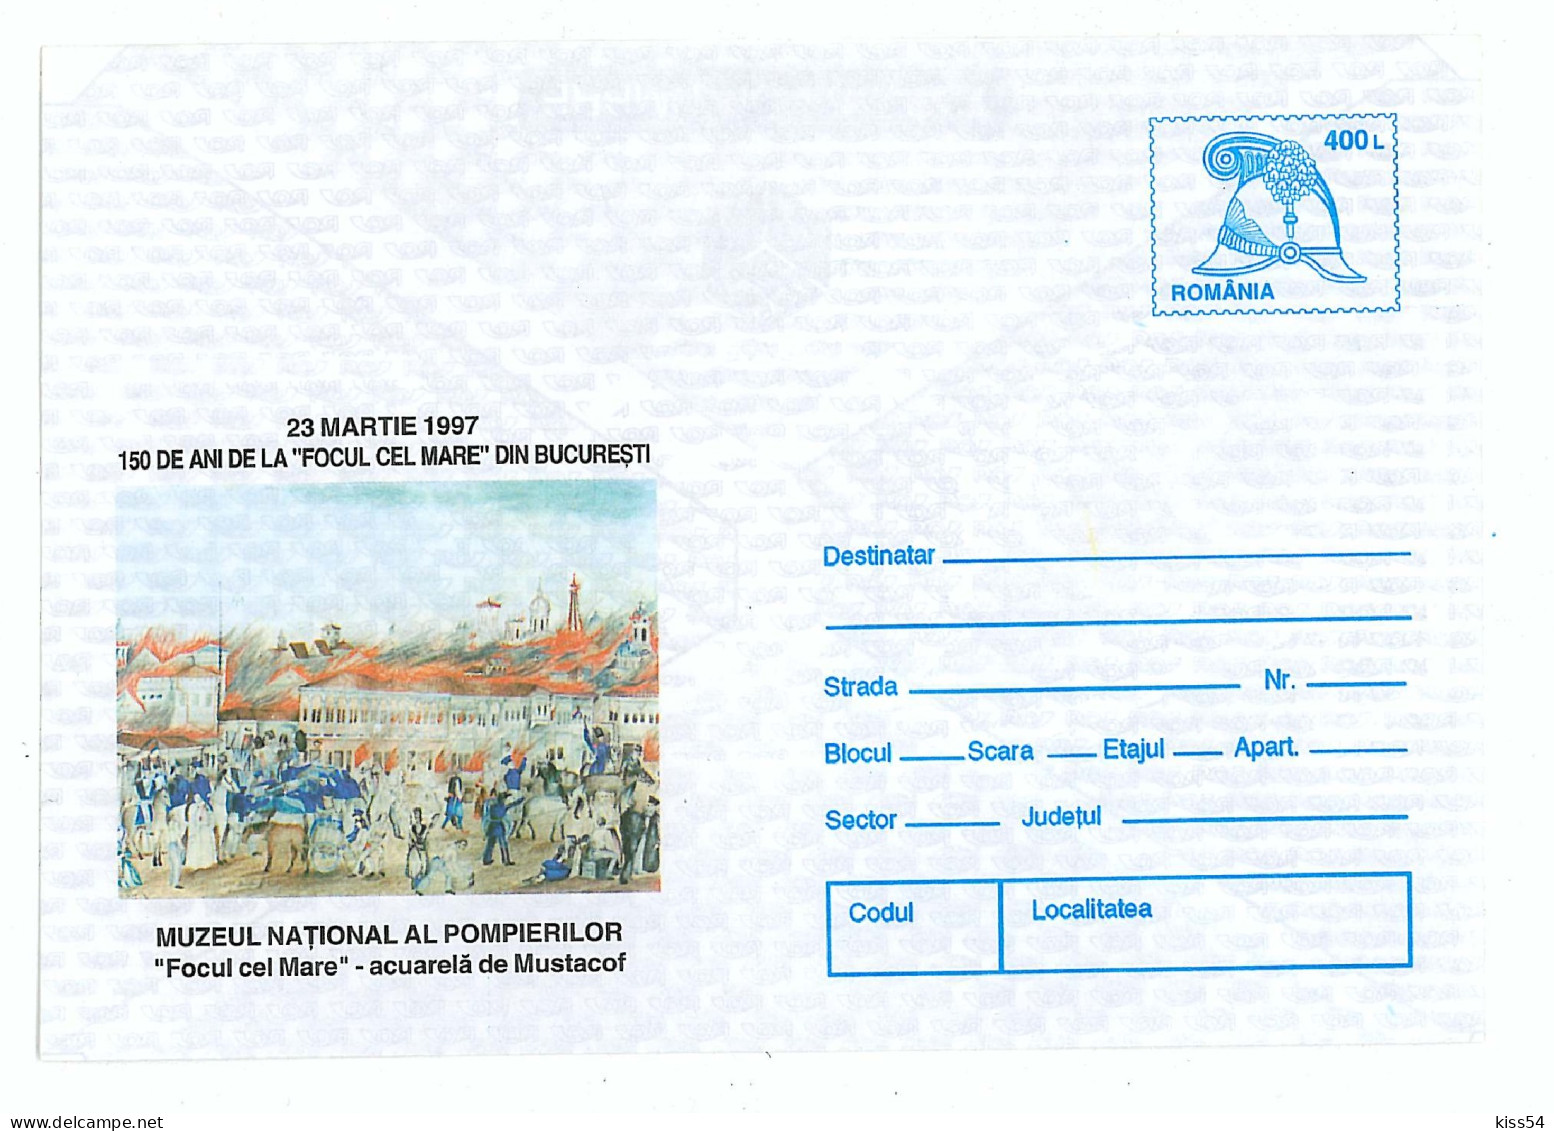 IP 97 - 37 Pompieri, FIREMEN, Romania - Stationery - Unused - 1997 - Postal Stationery